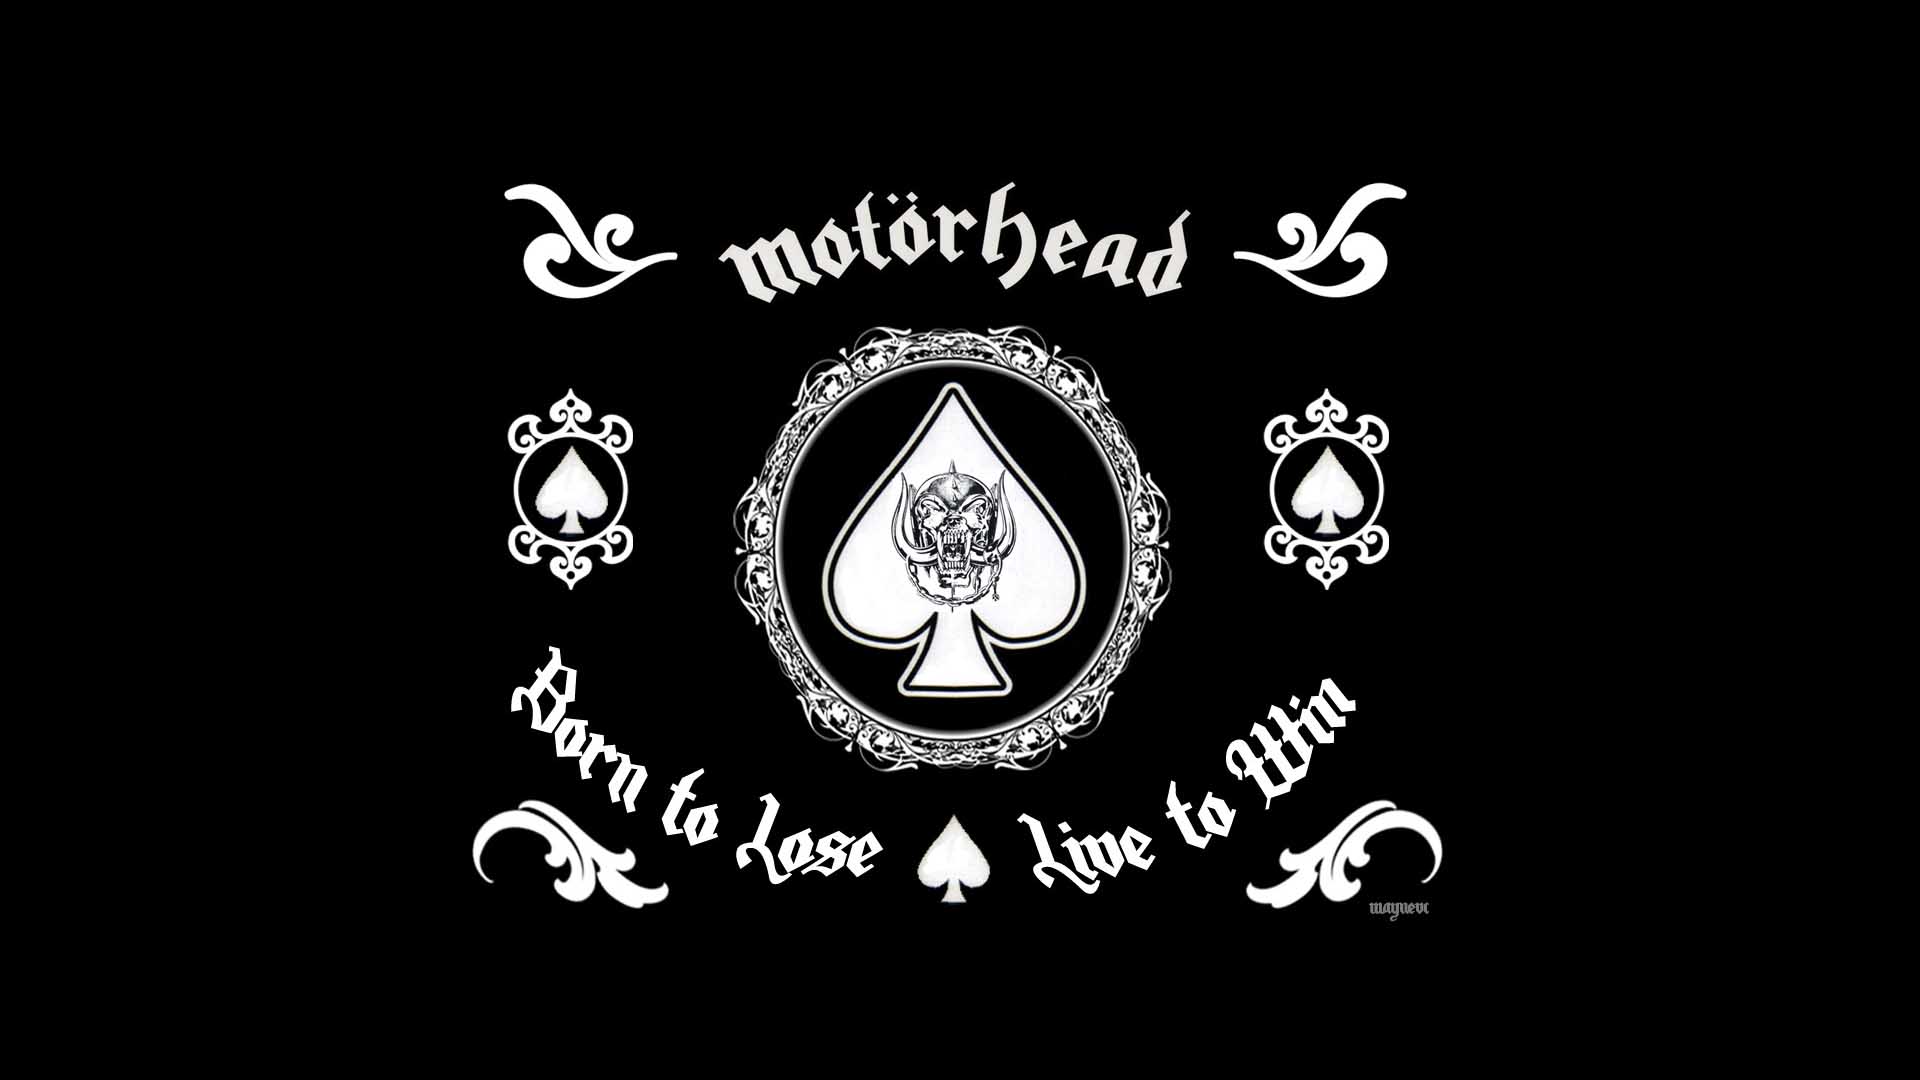 Motorhead Wallpaper Background Image